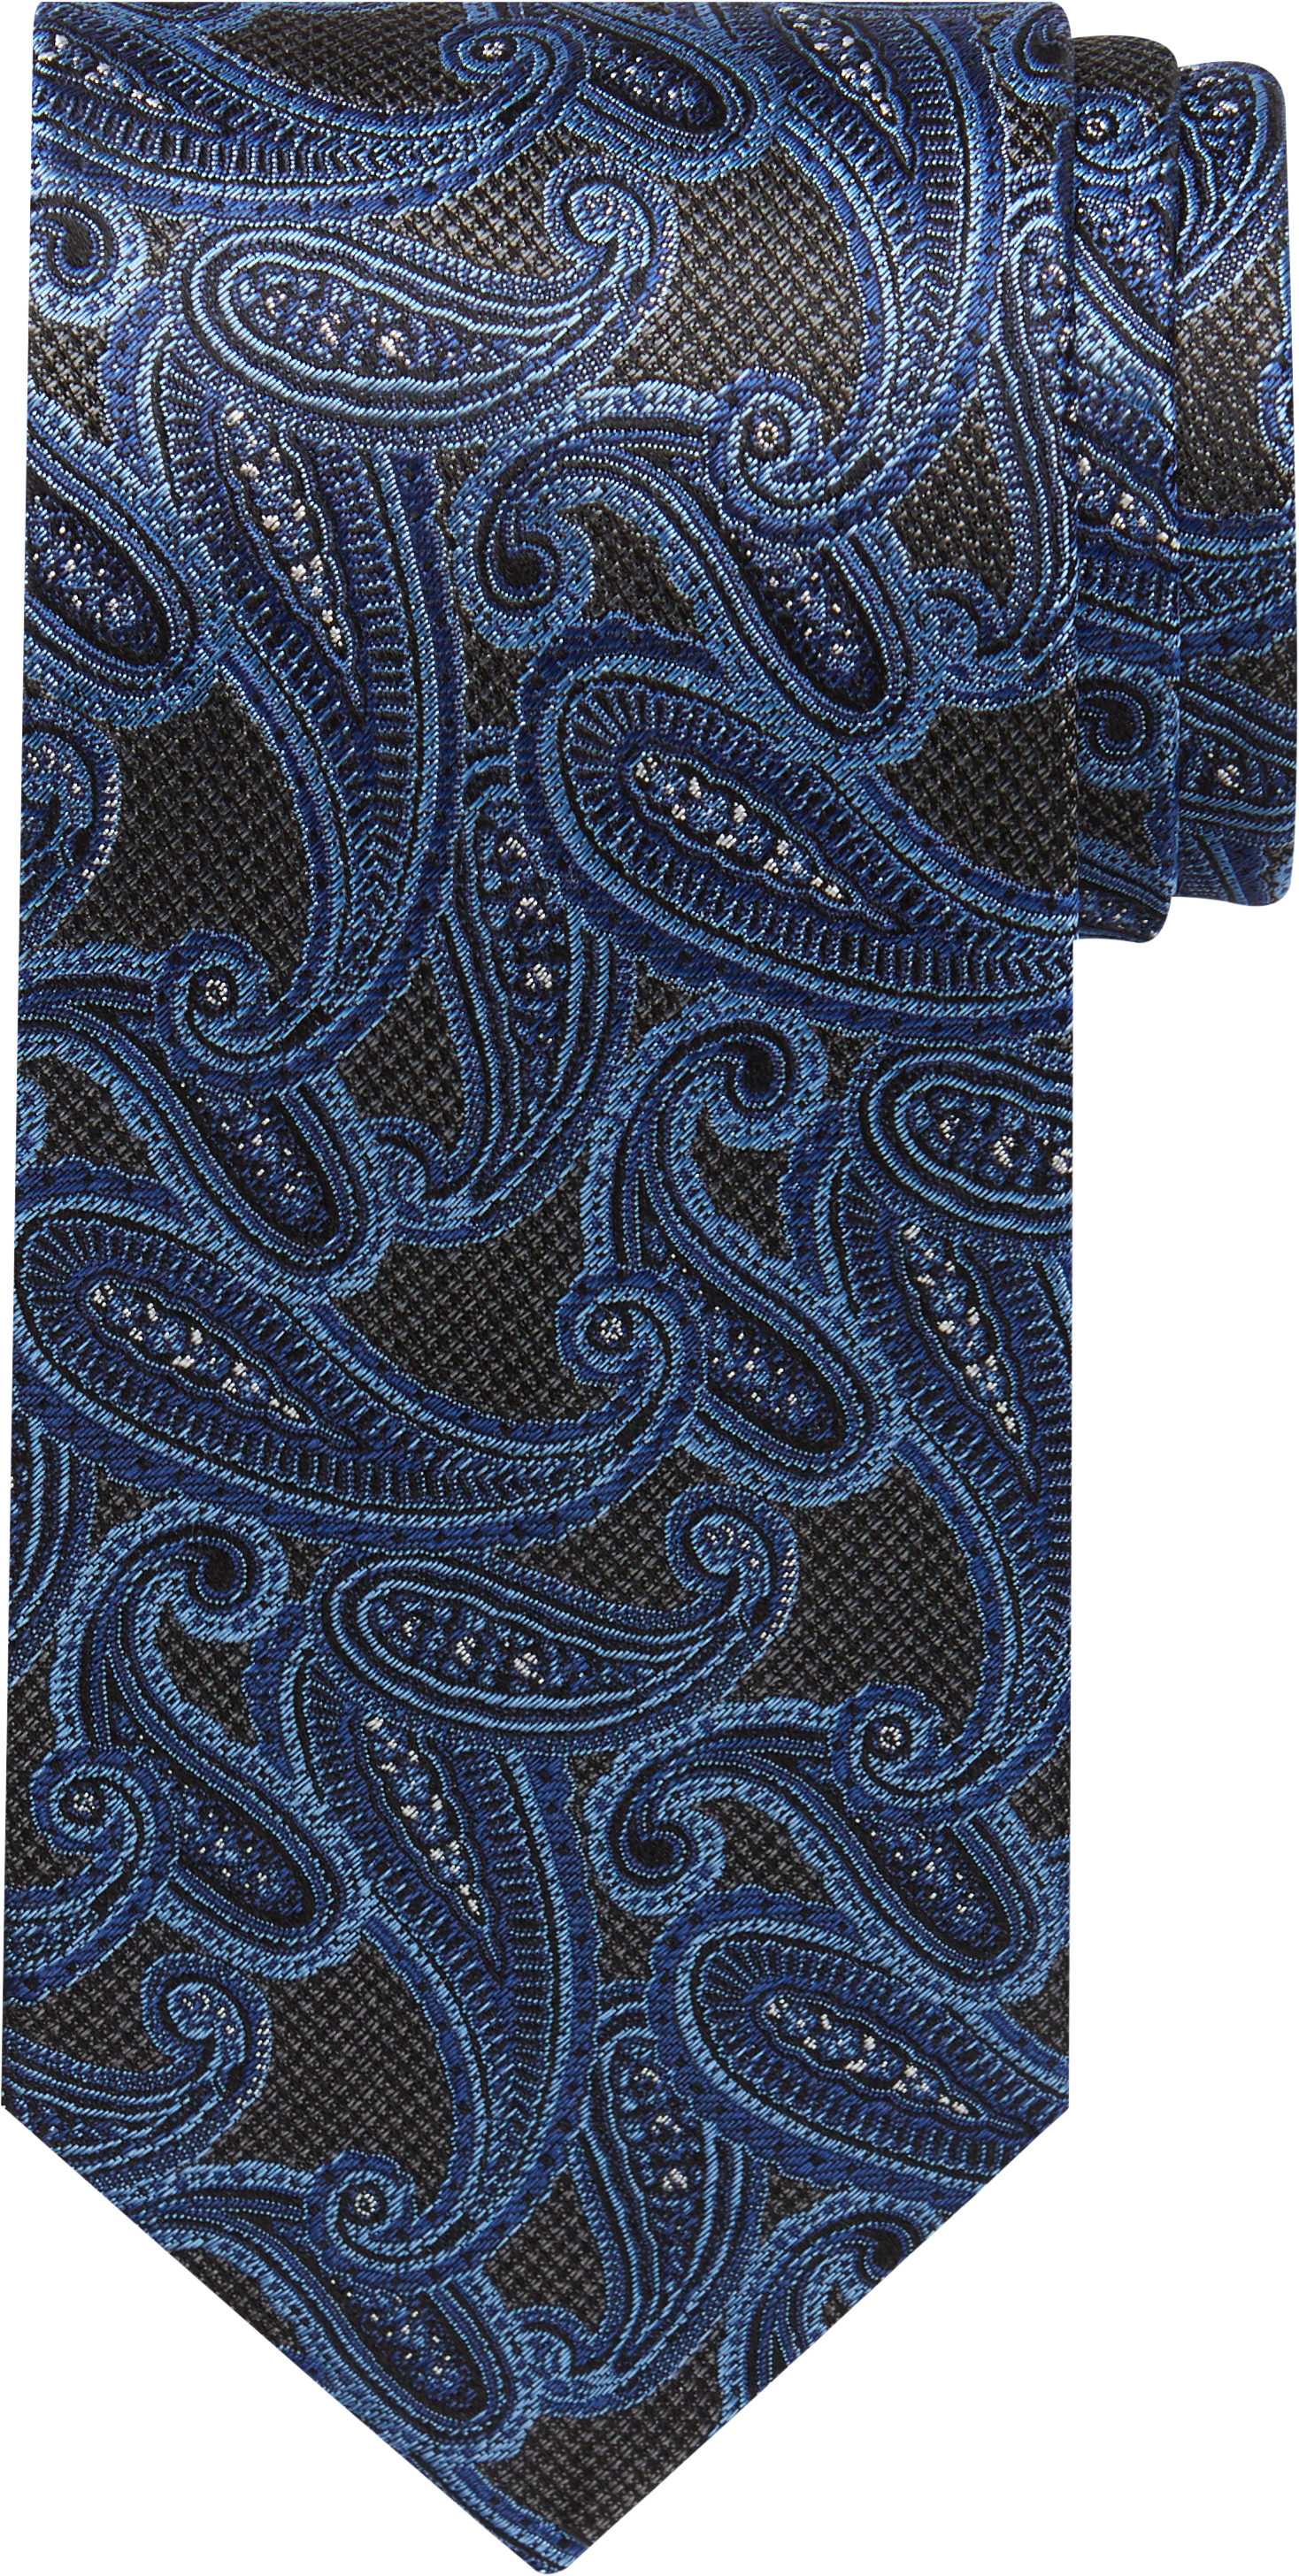 Pronto Uomo Narrow Tie, Blue & Charcoal Paisley - Men's Accessories ...